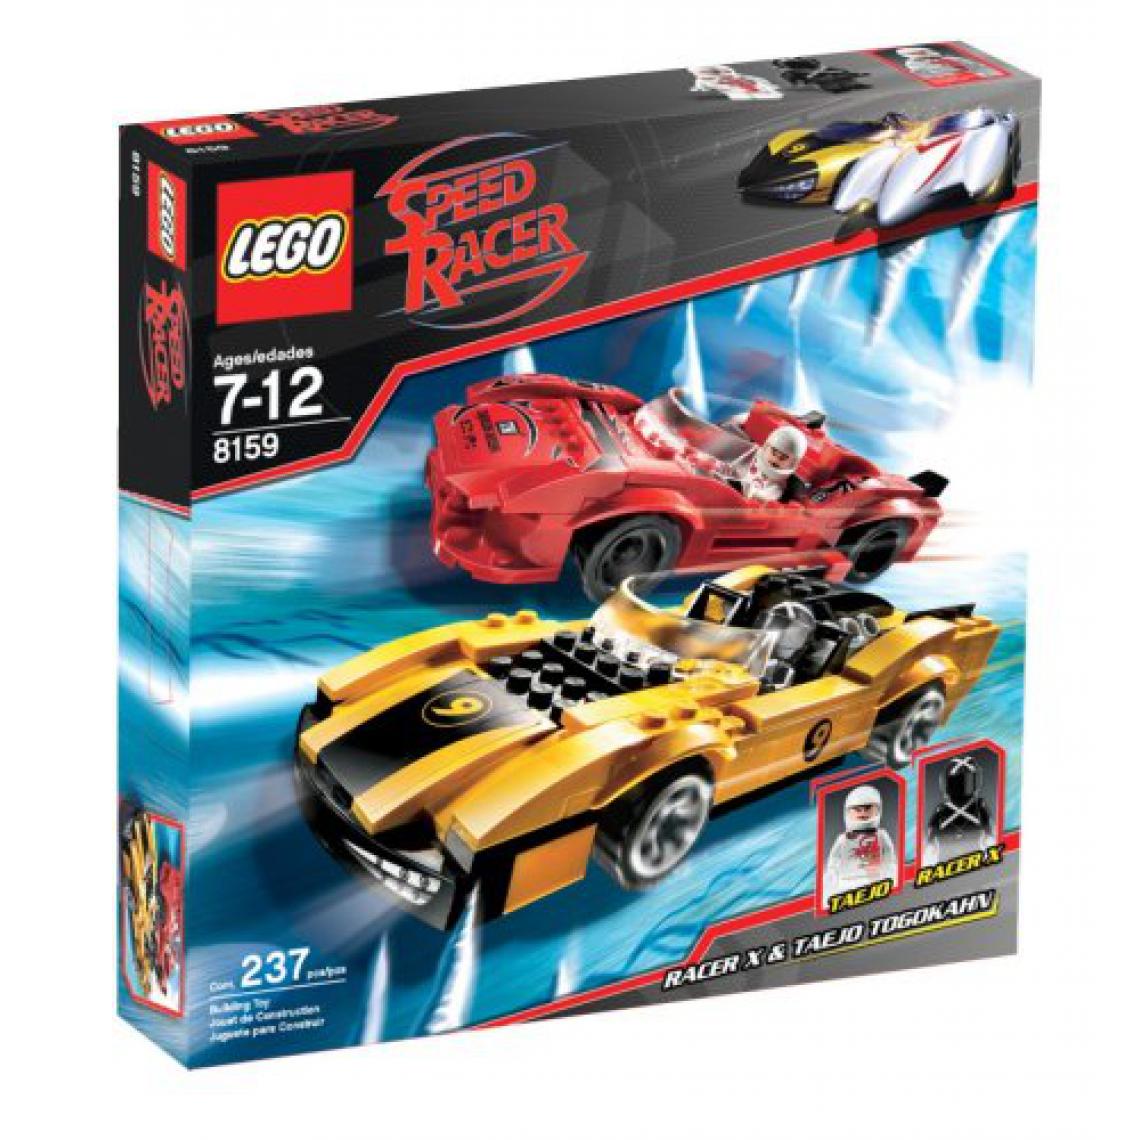 Lego - LEgO Racers: Racer X et Taejo Togokahn - Briques et blocs